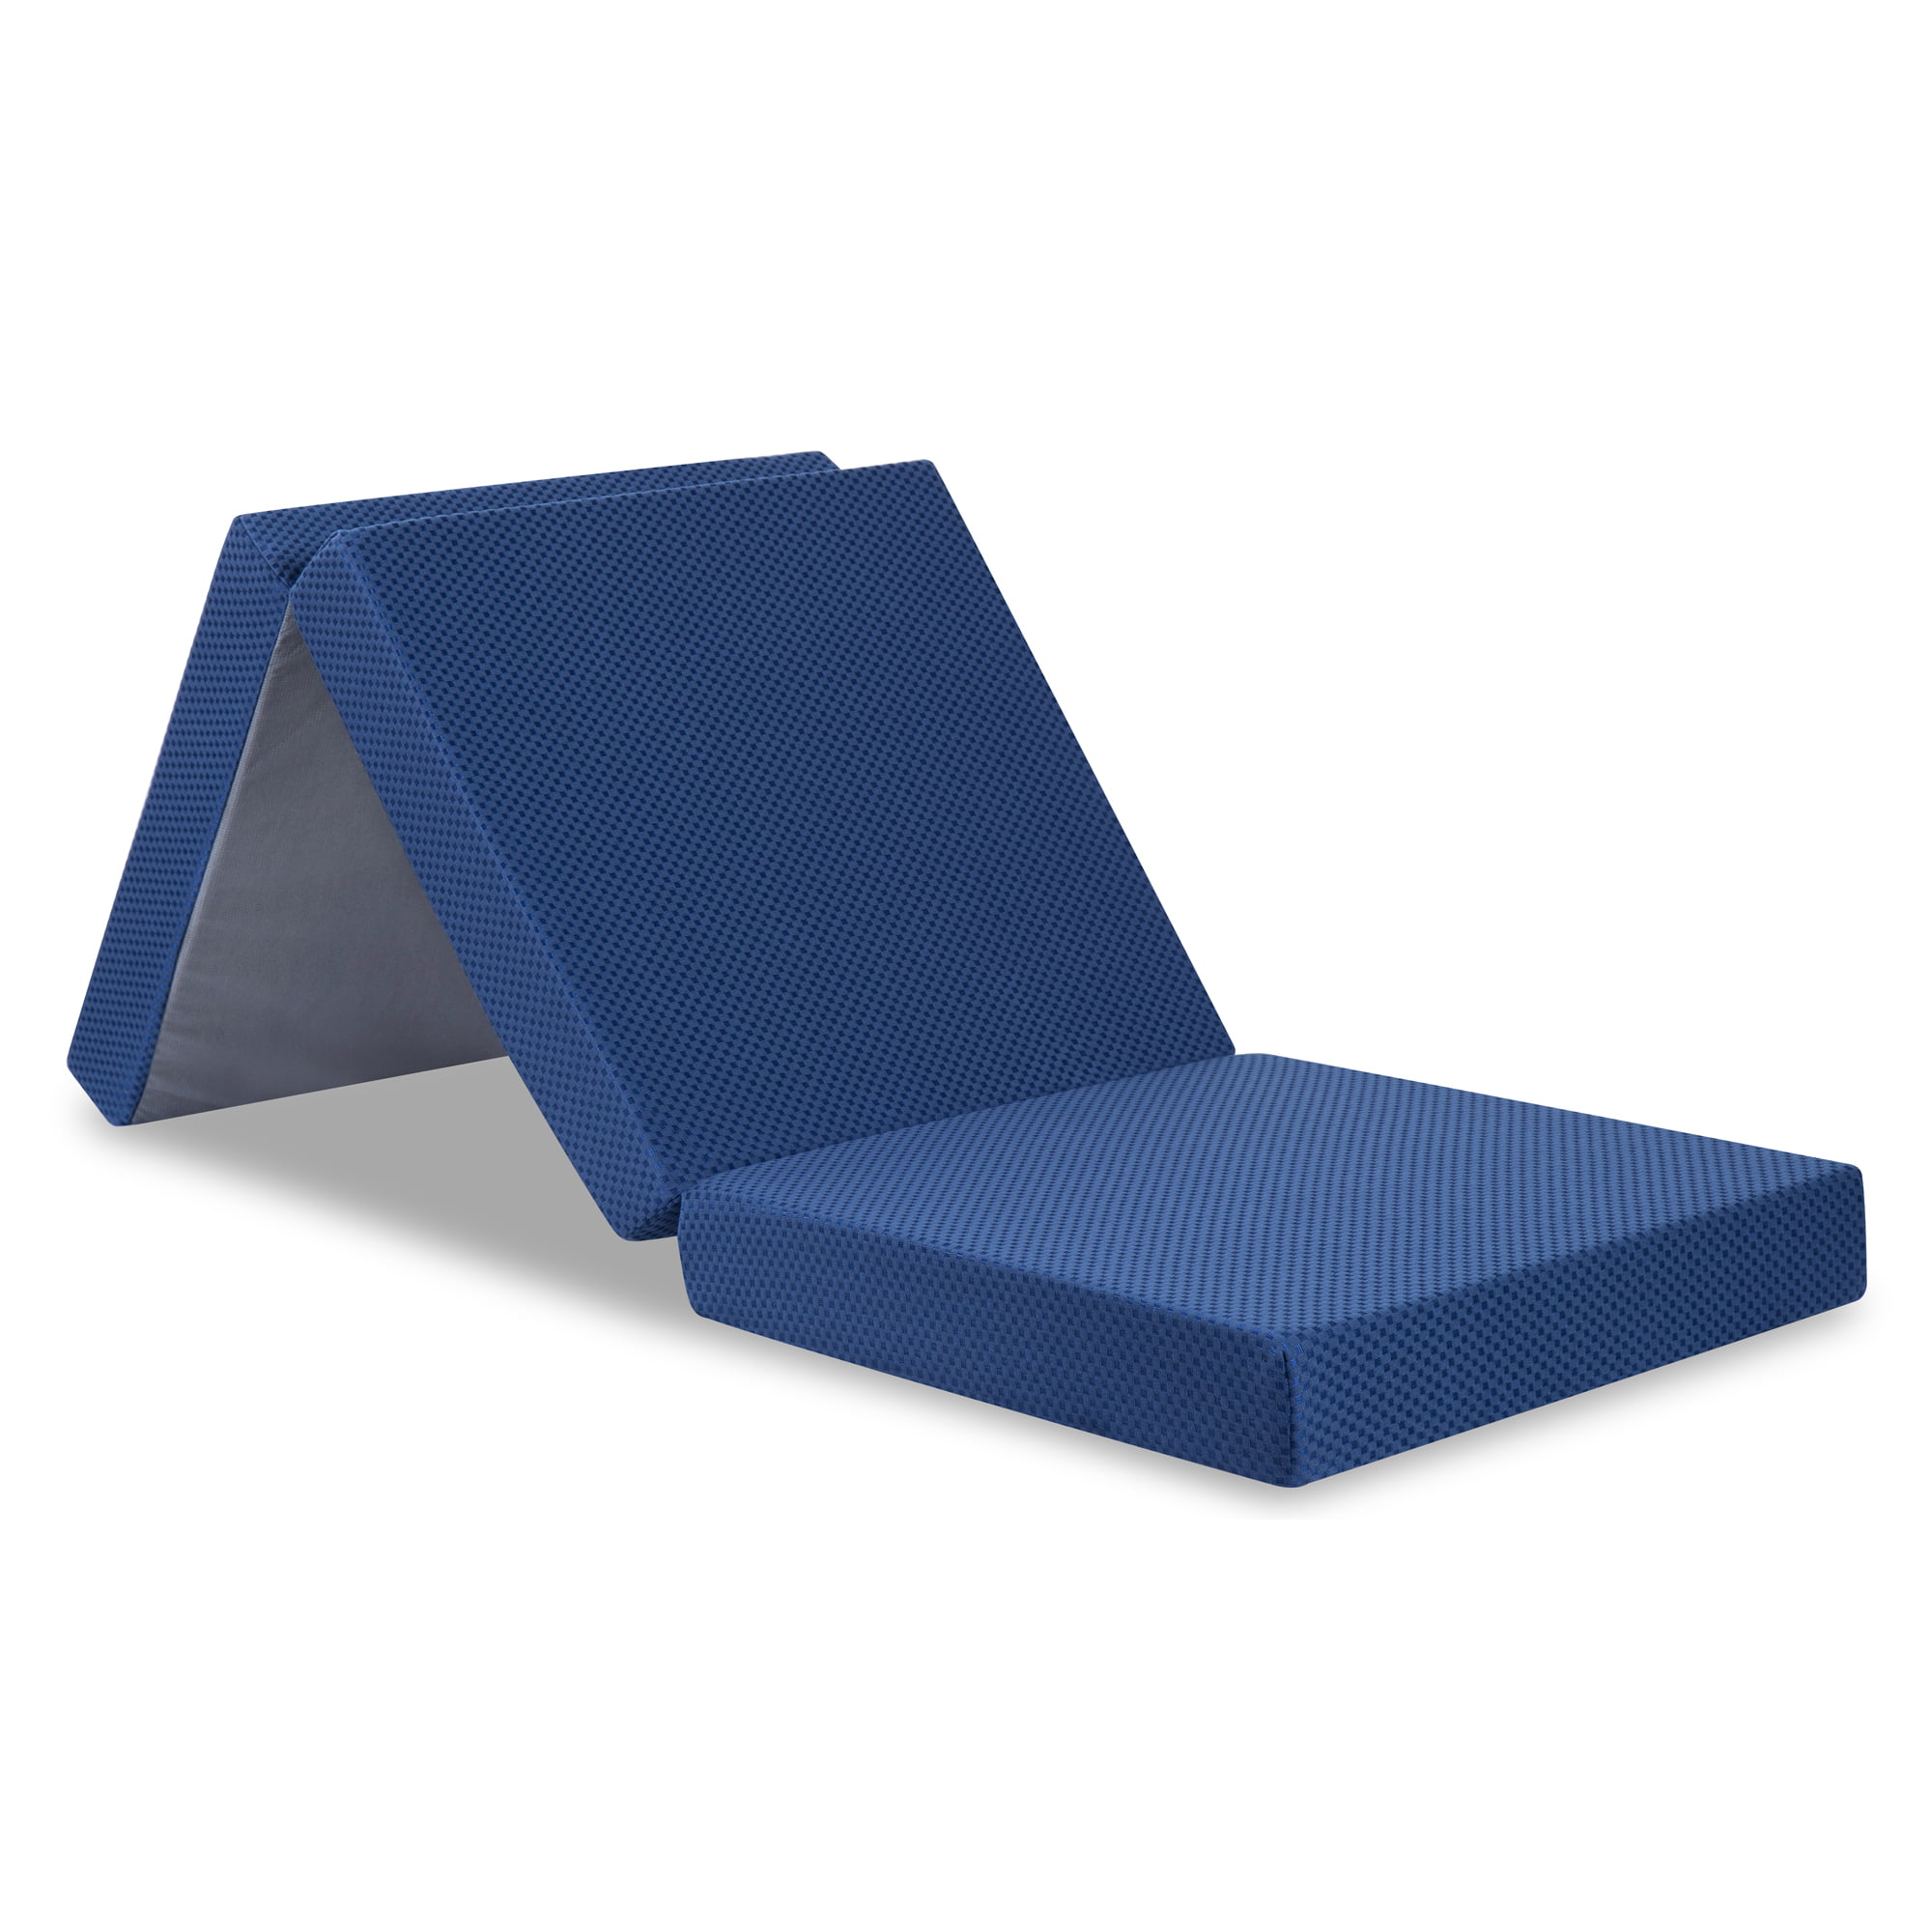 TriFold Memory Foam Mattress Sleeper Portable Camping Dorm ...